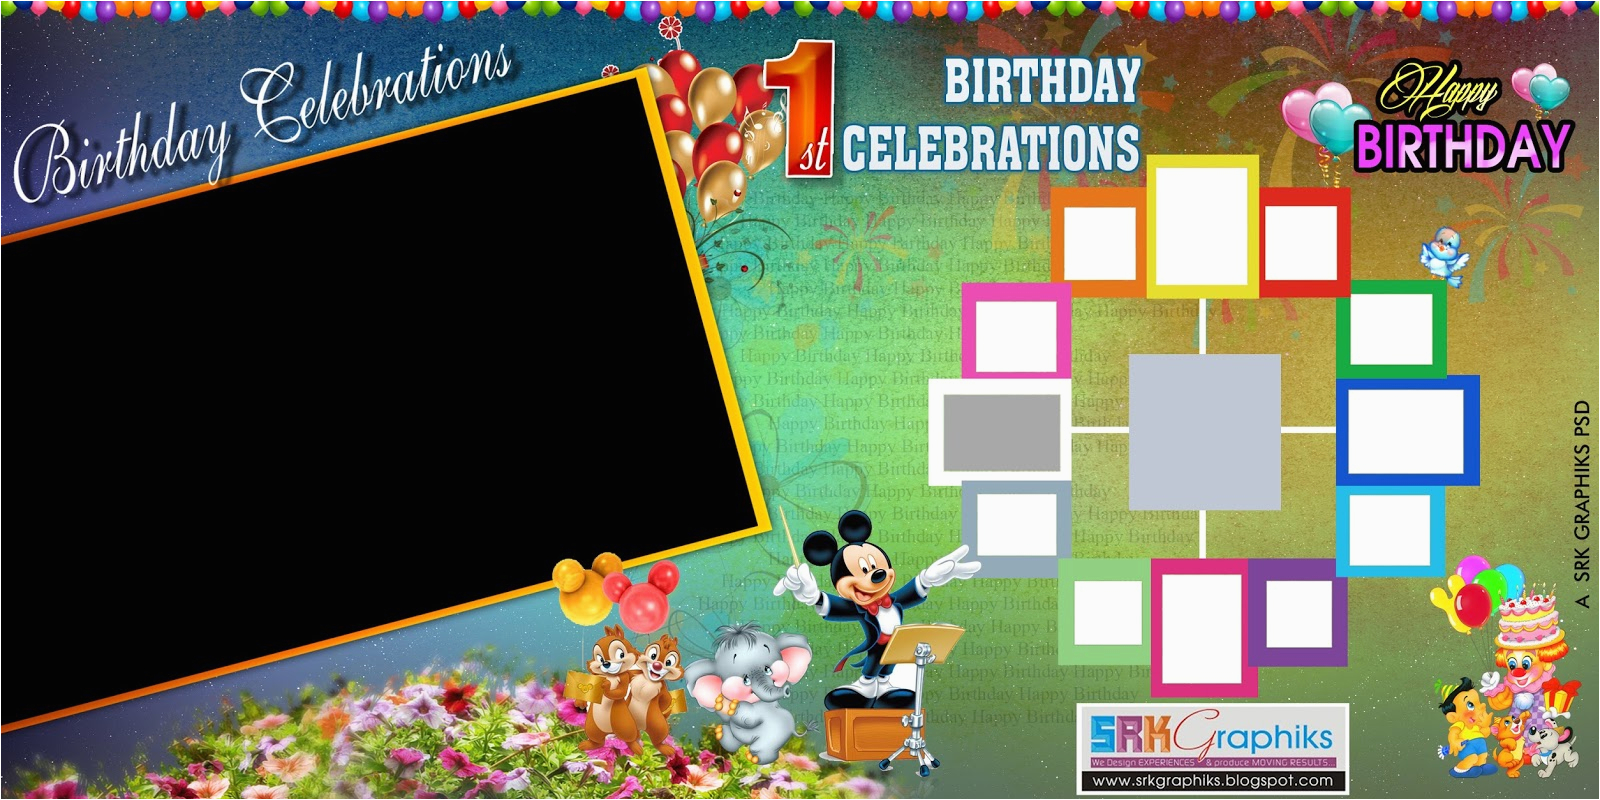 Happy Birthday Banner Wallpaper Download | BirthdayBuzz